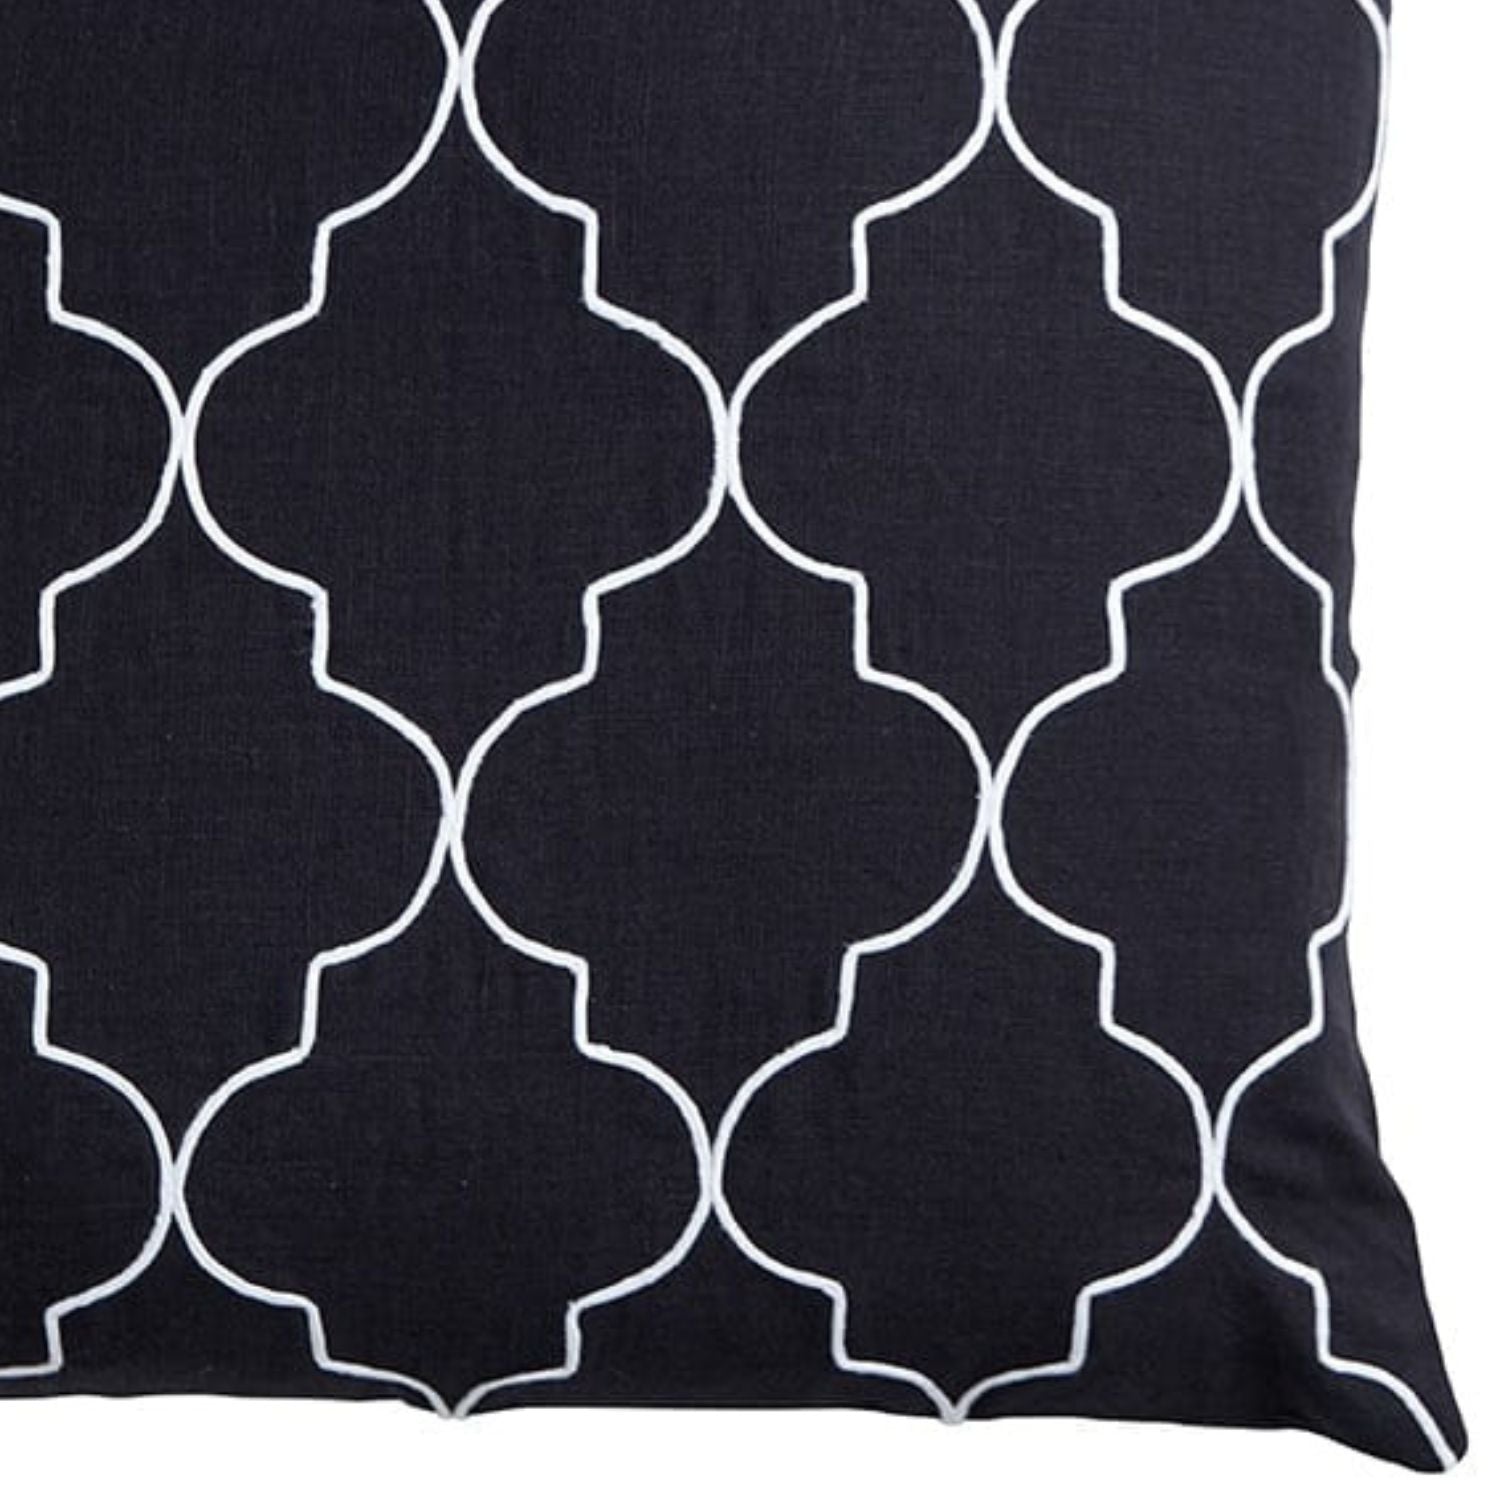 Black & White Lattice Cushion